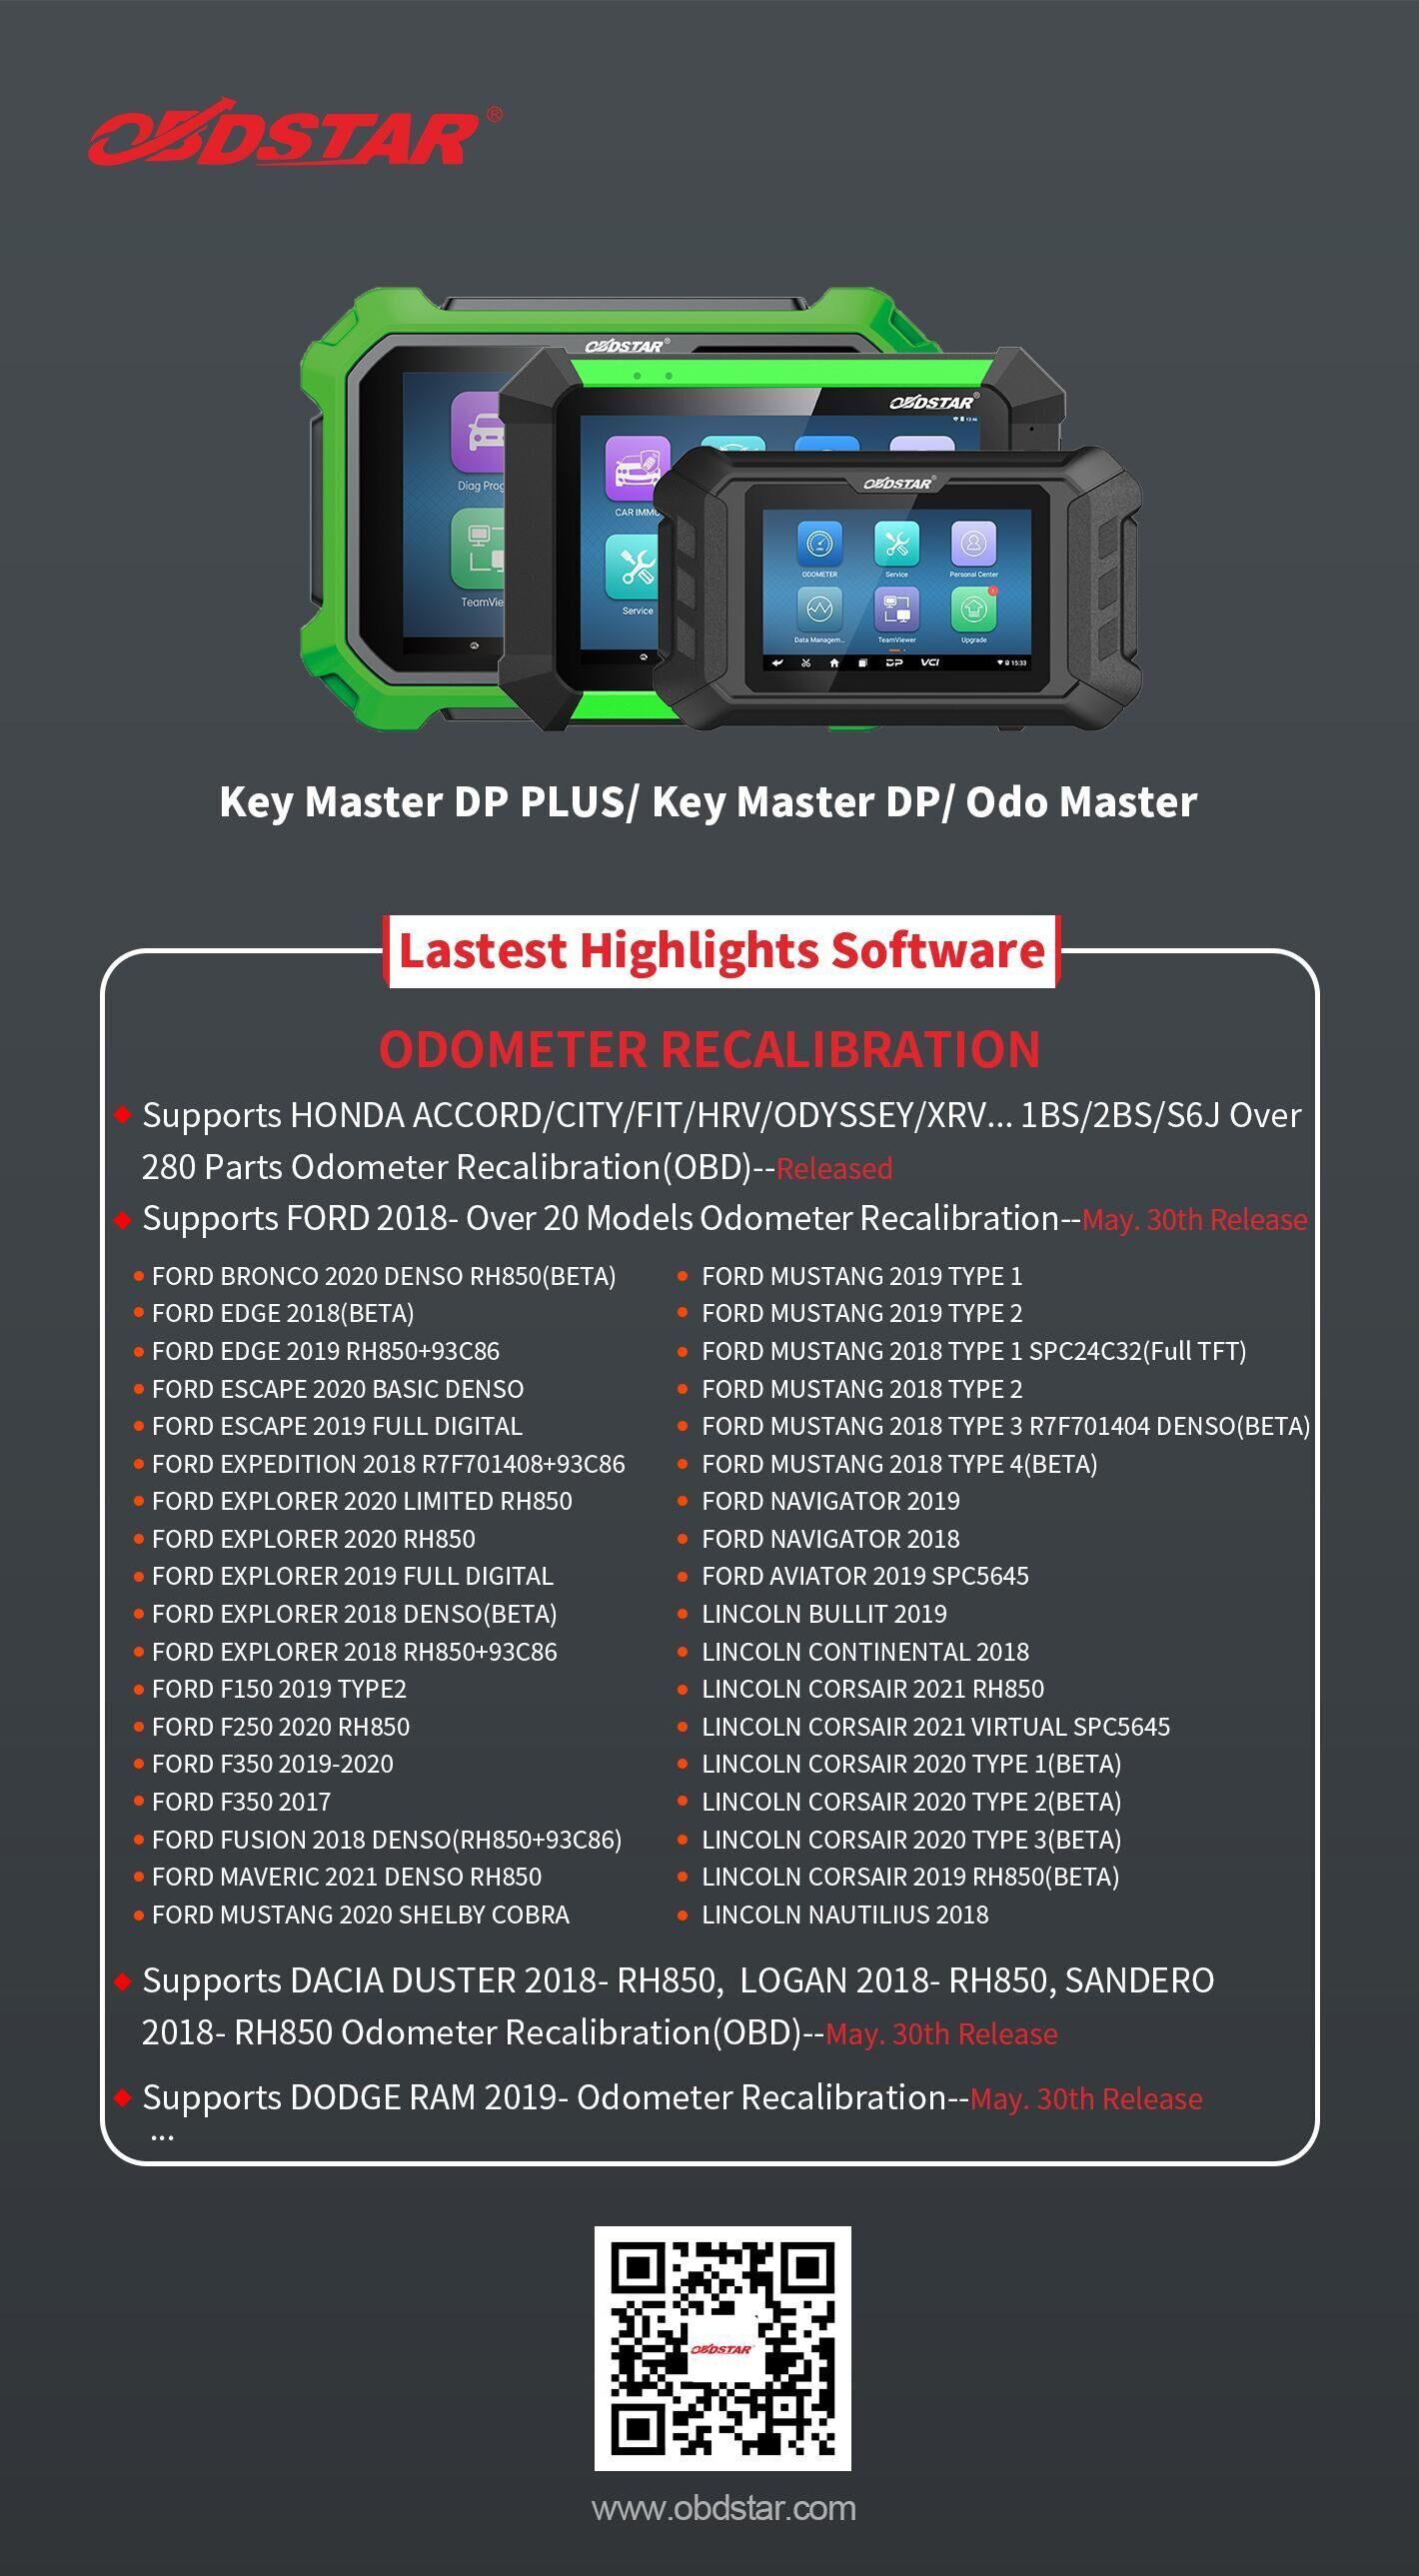 Highlights of OBDSTAR X300 DP PLUS/ Key Master DP/ Odo Master Lastest Updates